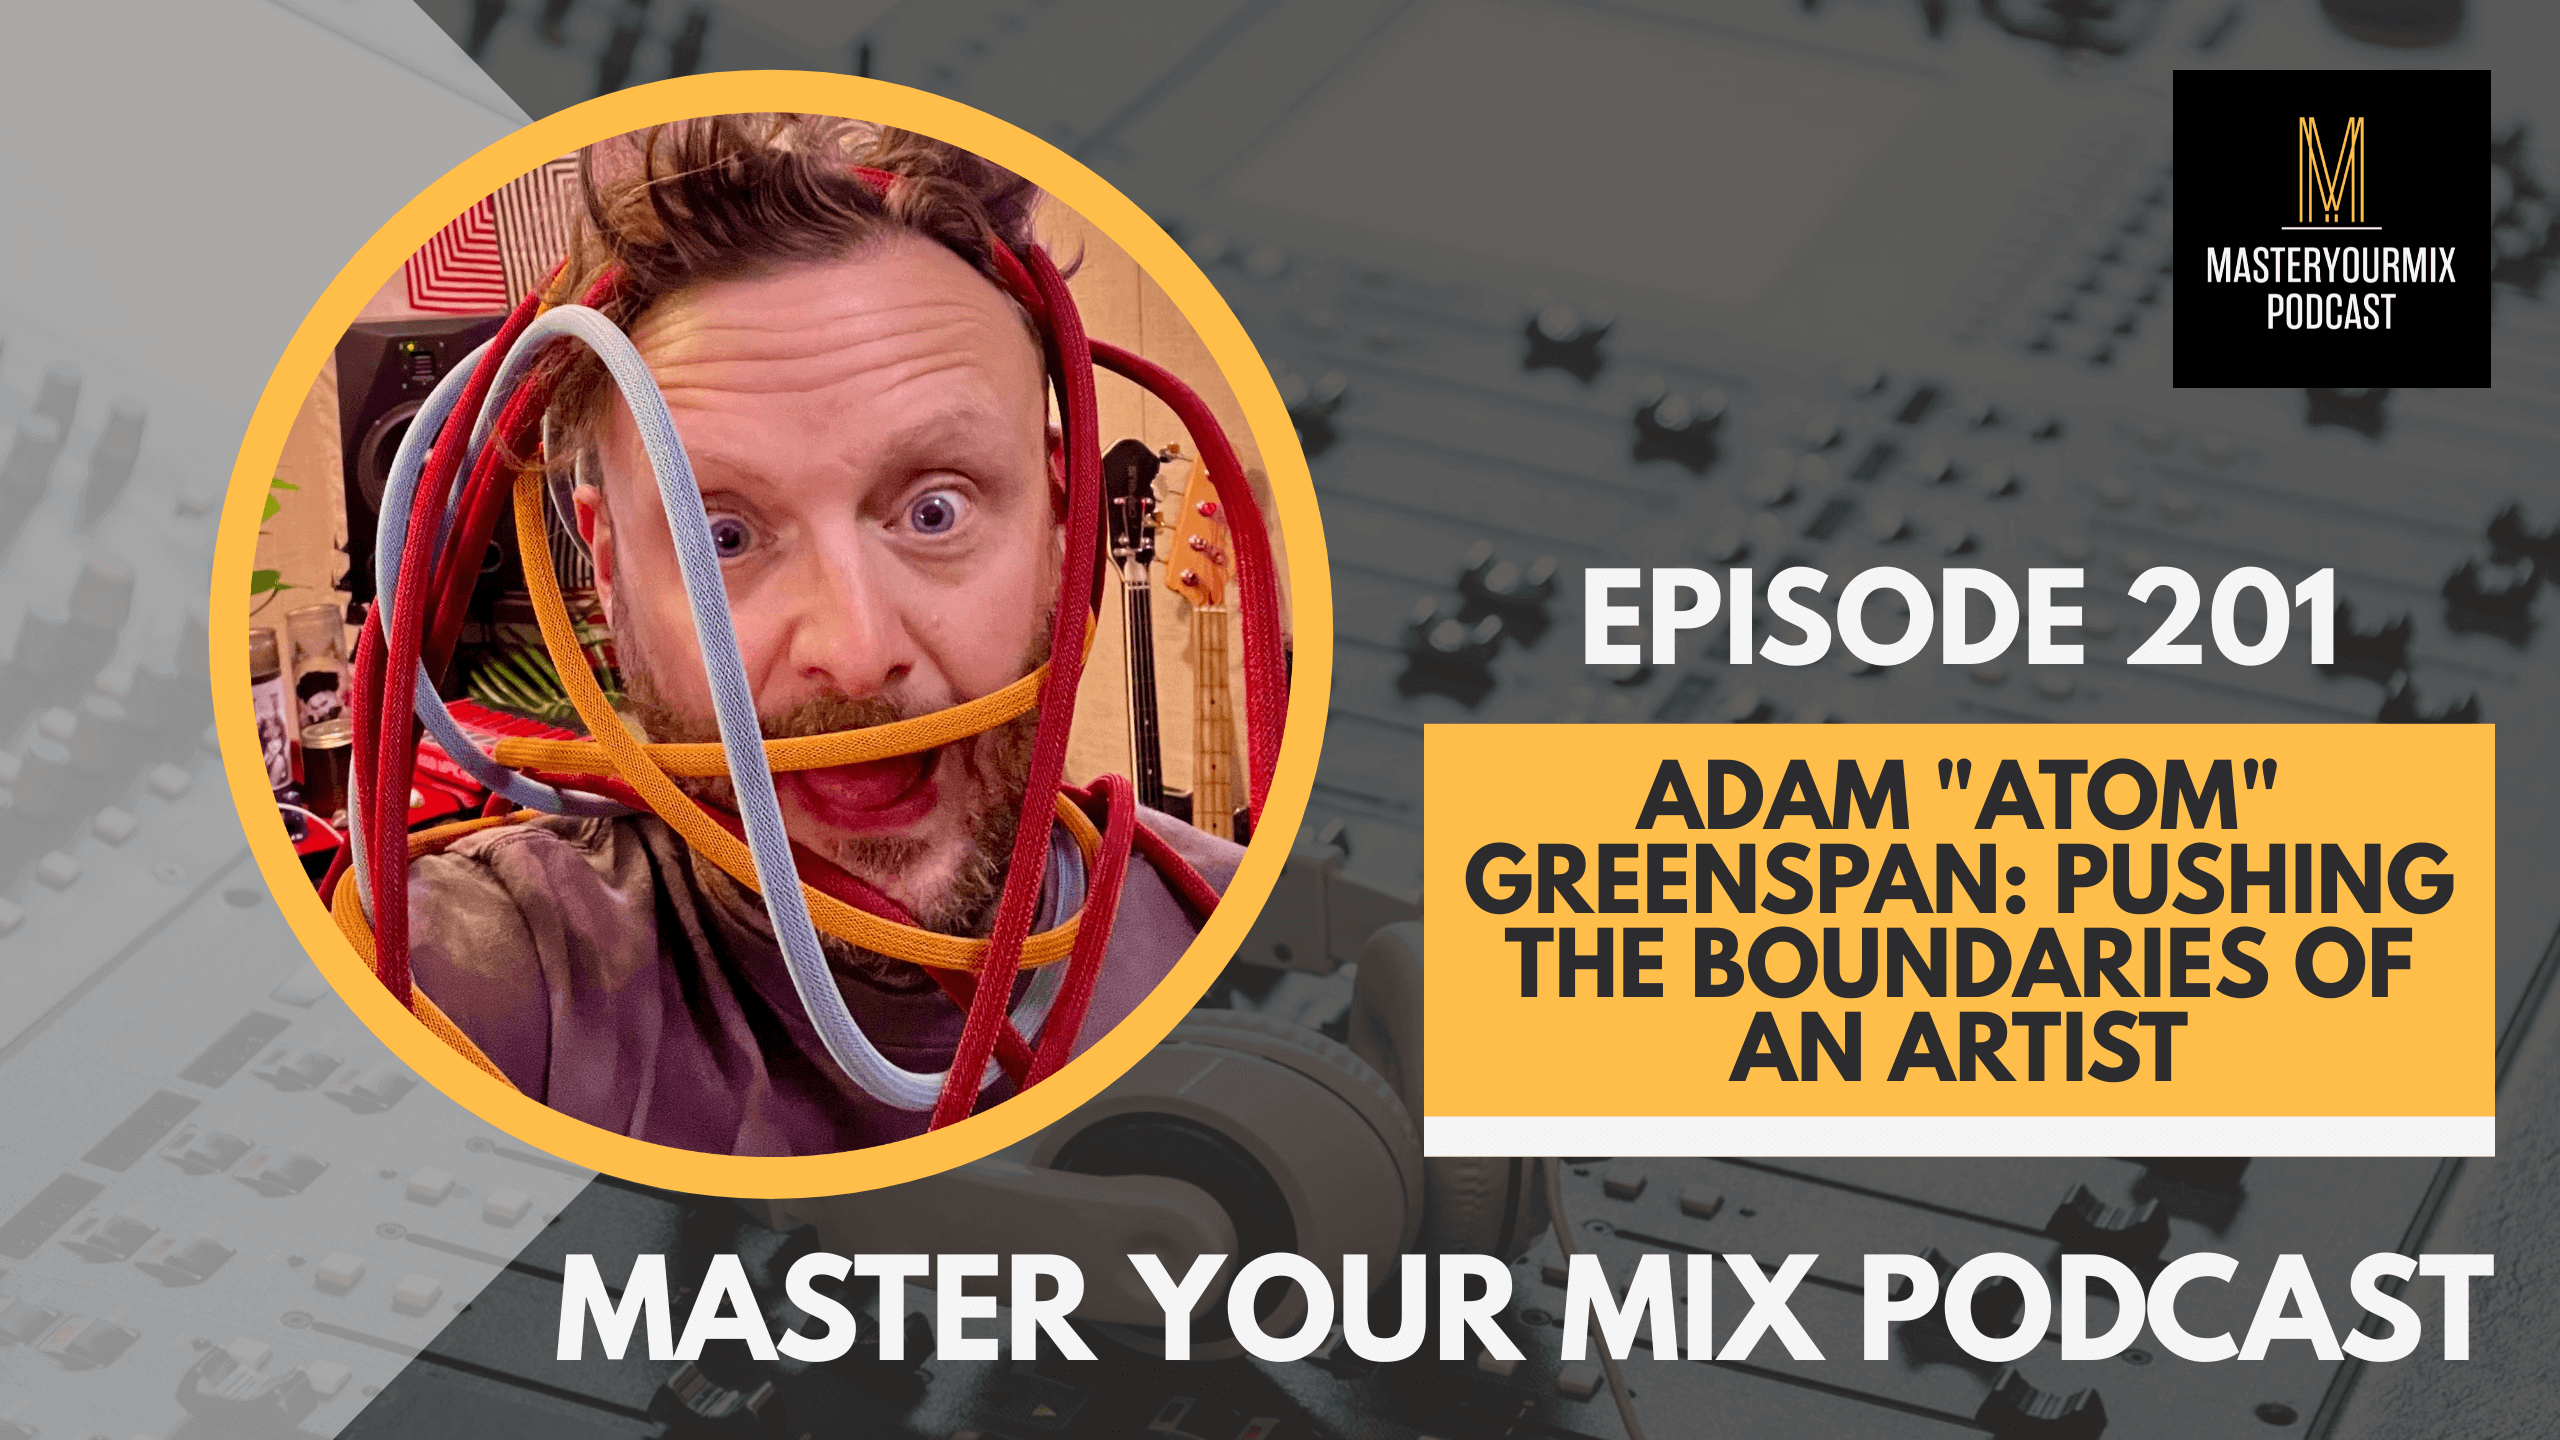 master your mix podcast, ep 201 adam "atom" greenspan